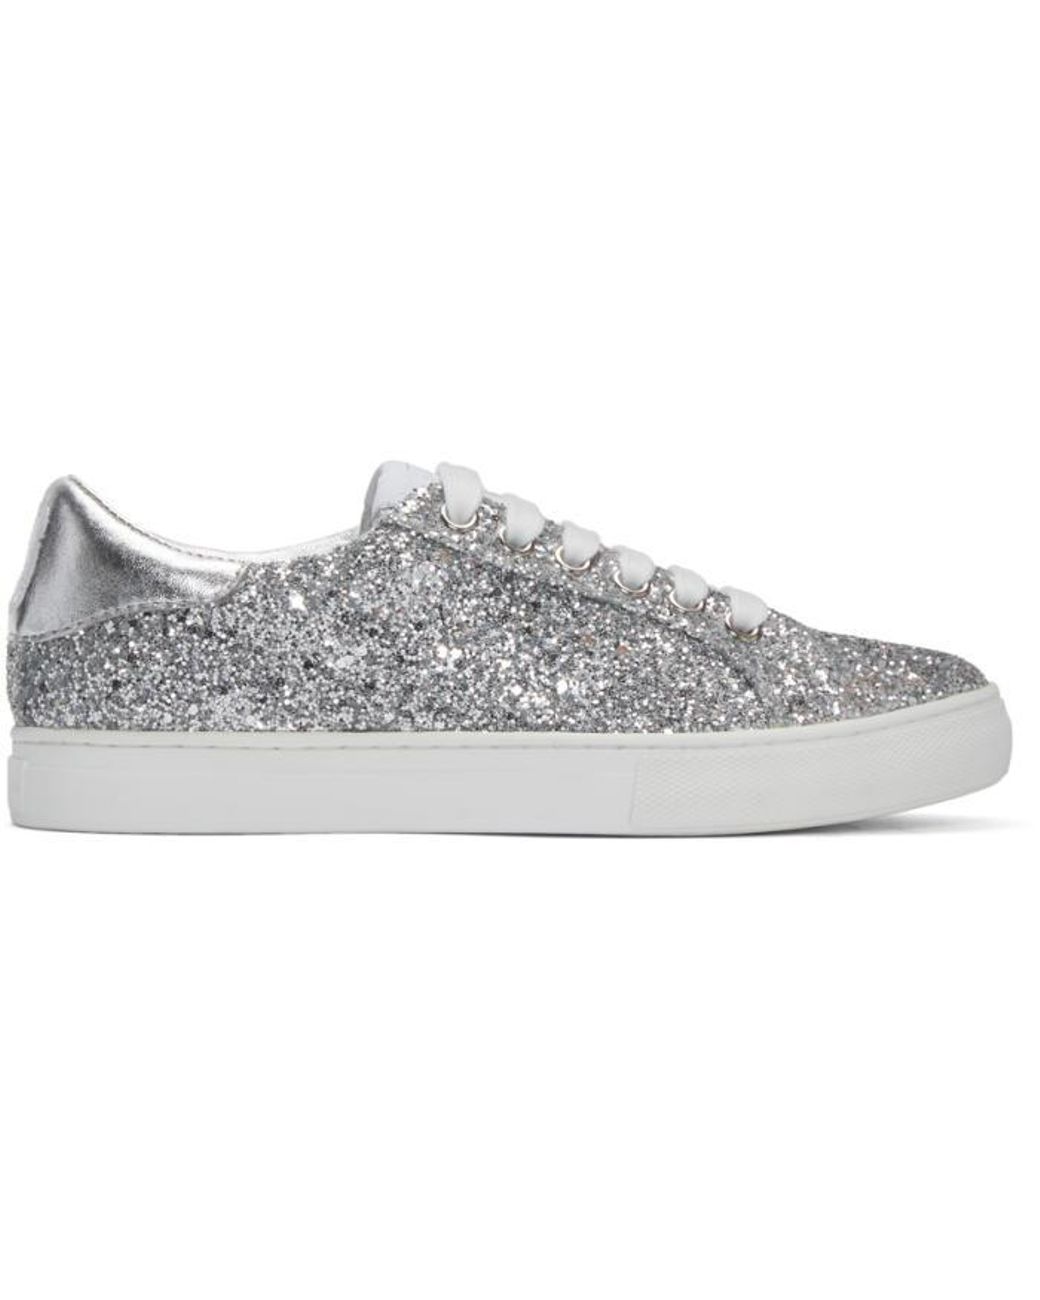 Marc Jacobs Silver Glitter Empire Sneakers in Metallic | Lyst